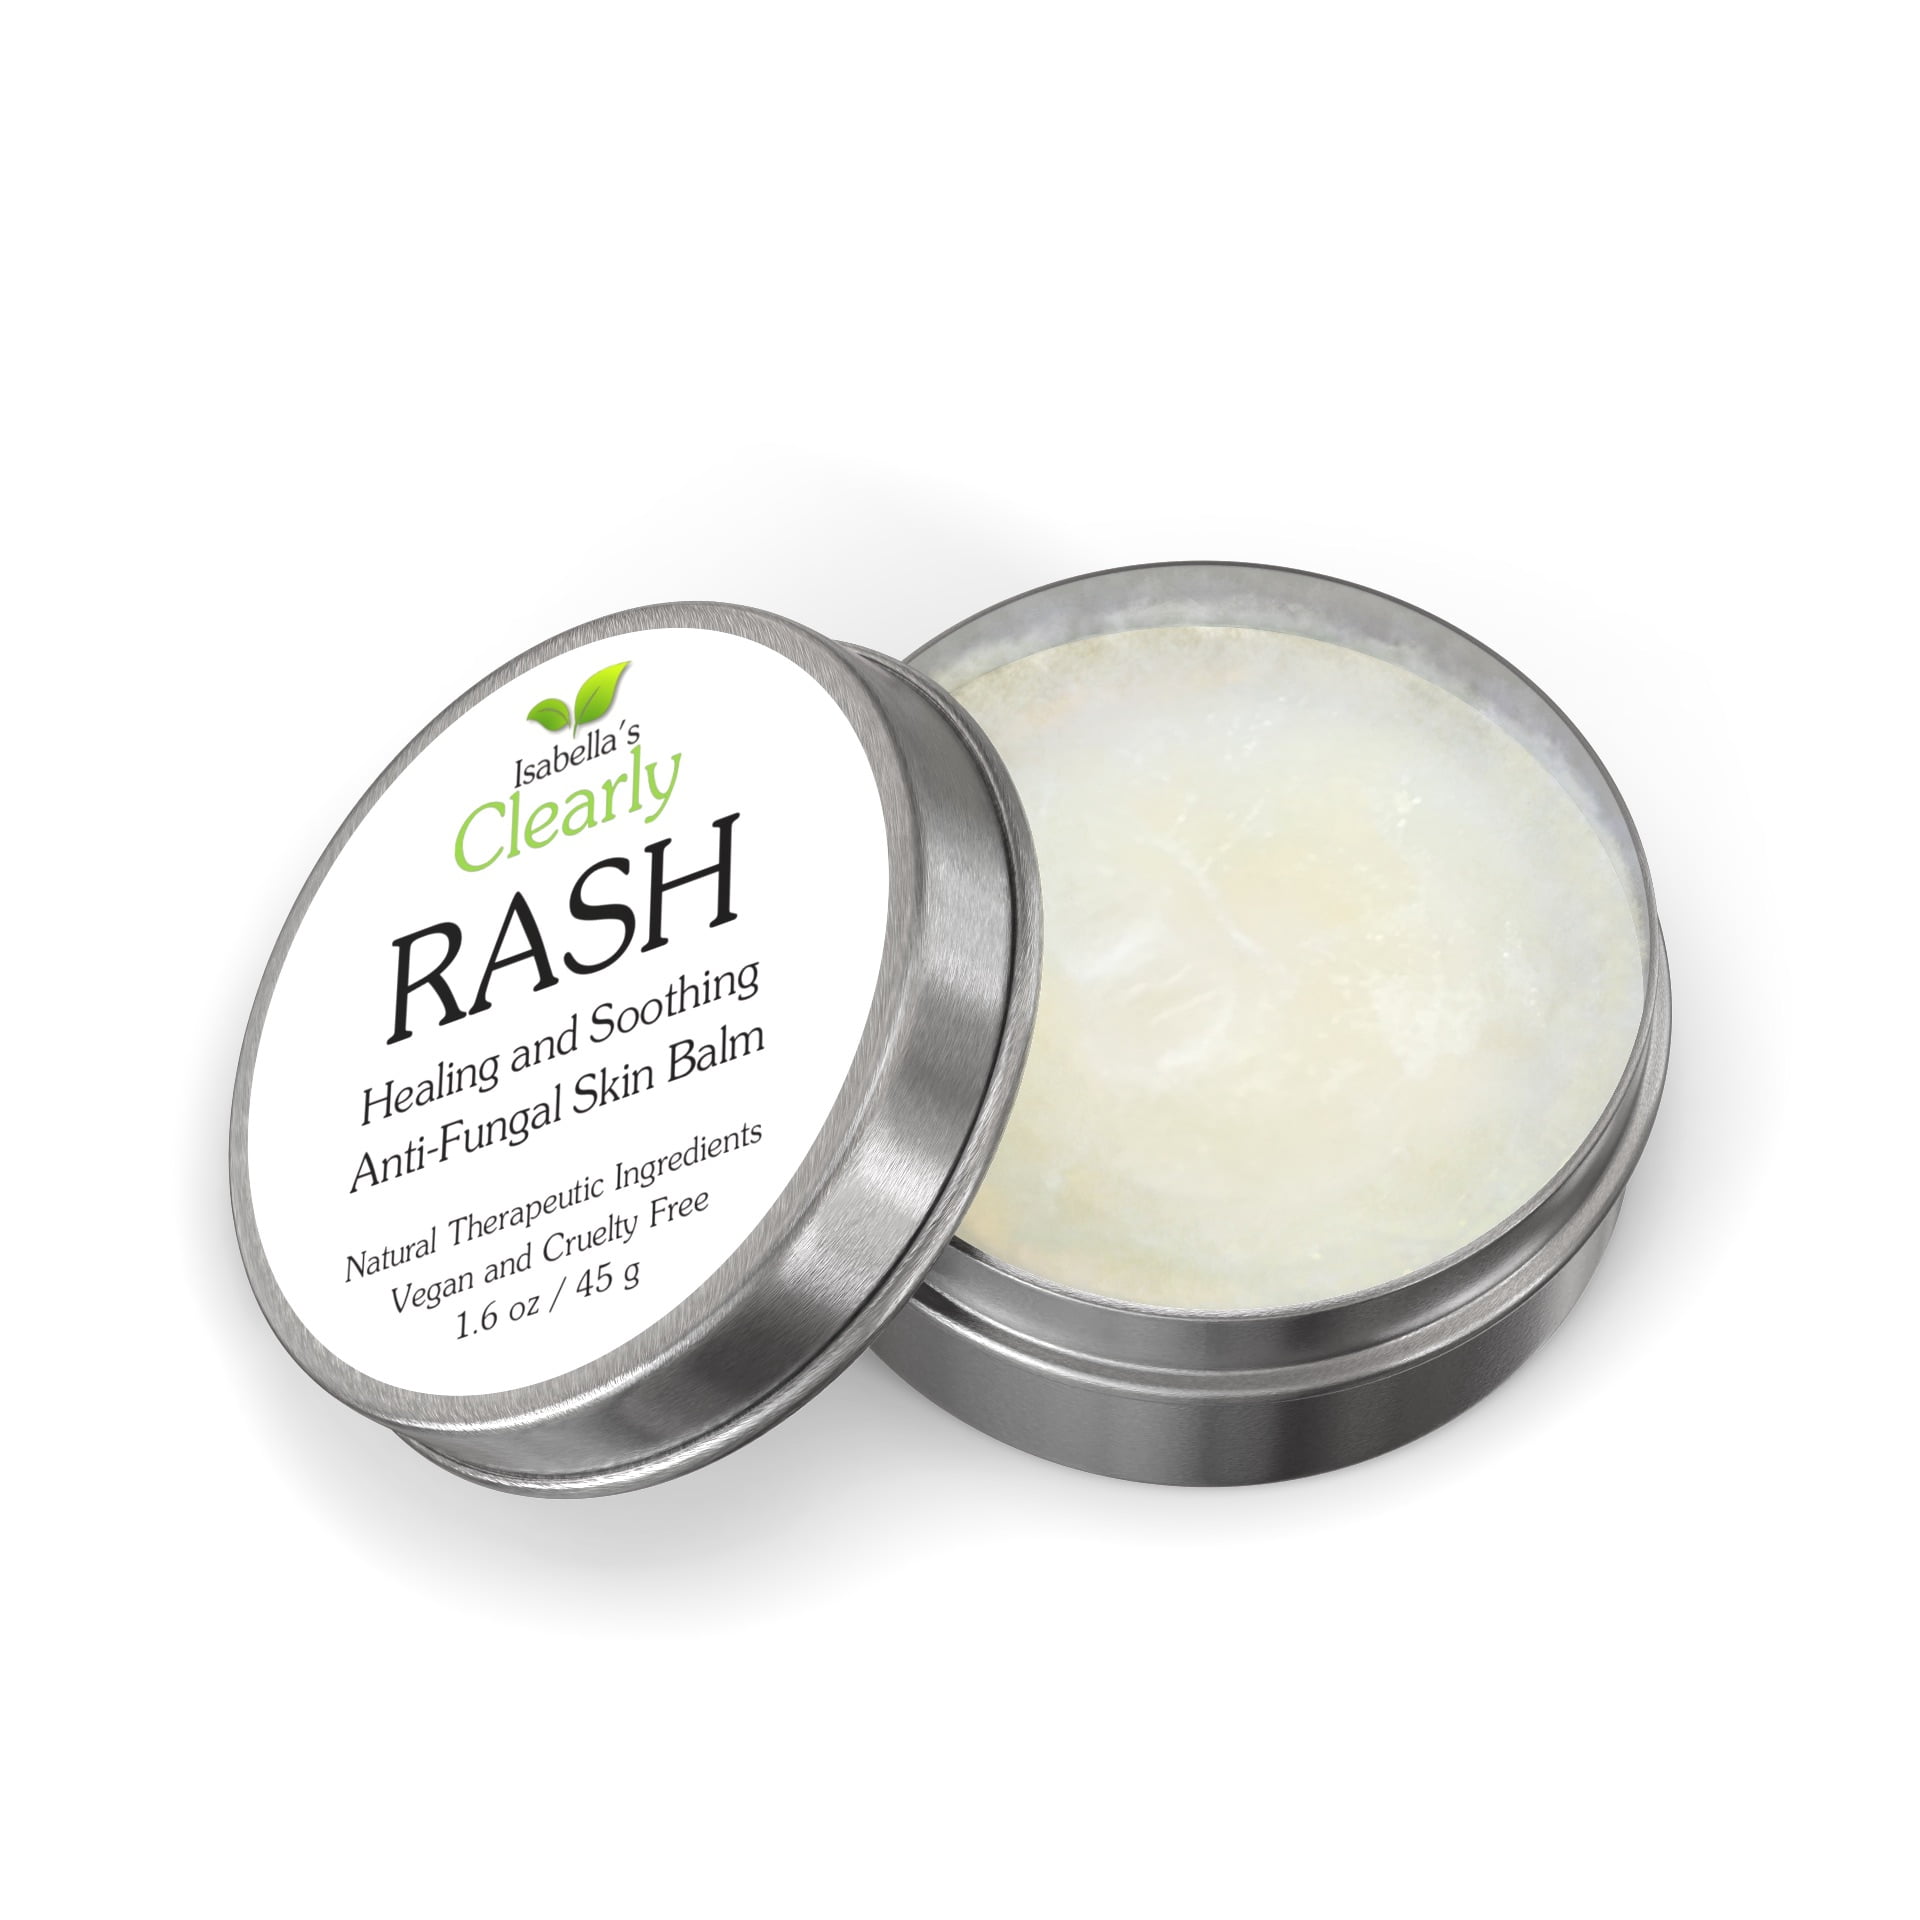 Clearly Rash Anti Fungal Skin Cream For Rash Itching Jock Itch